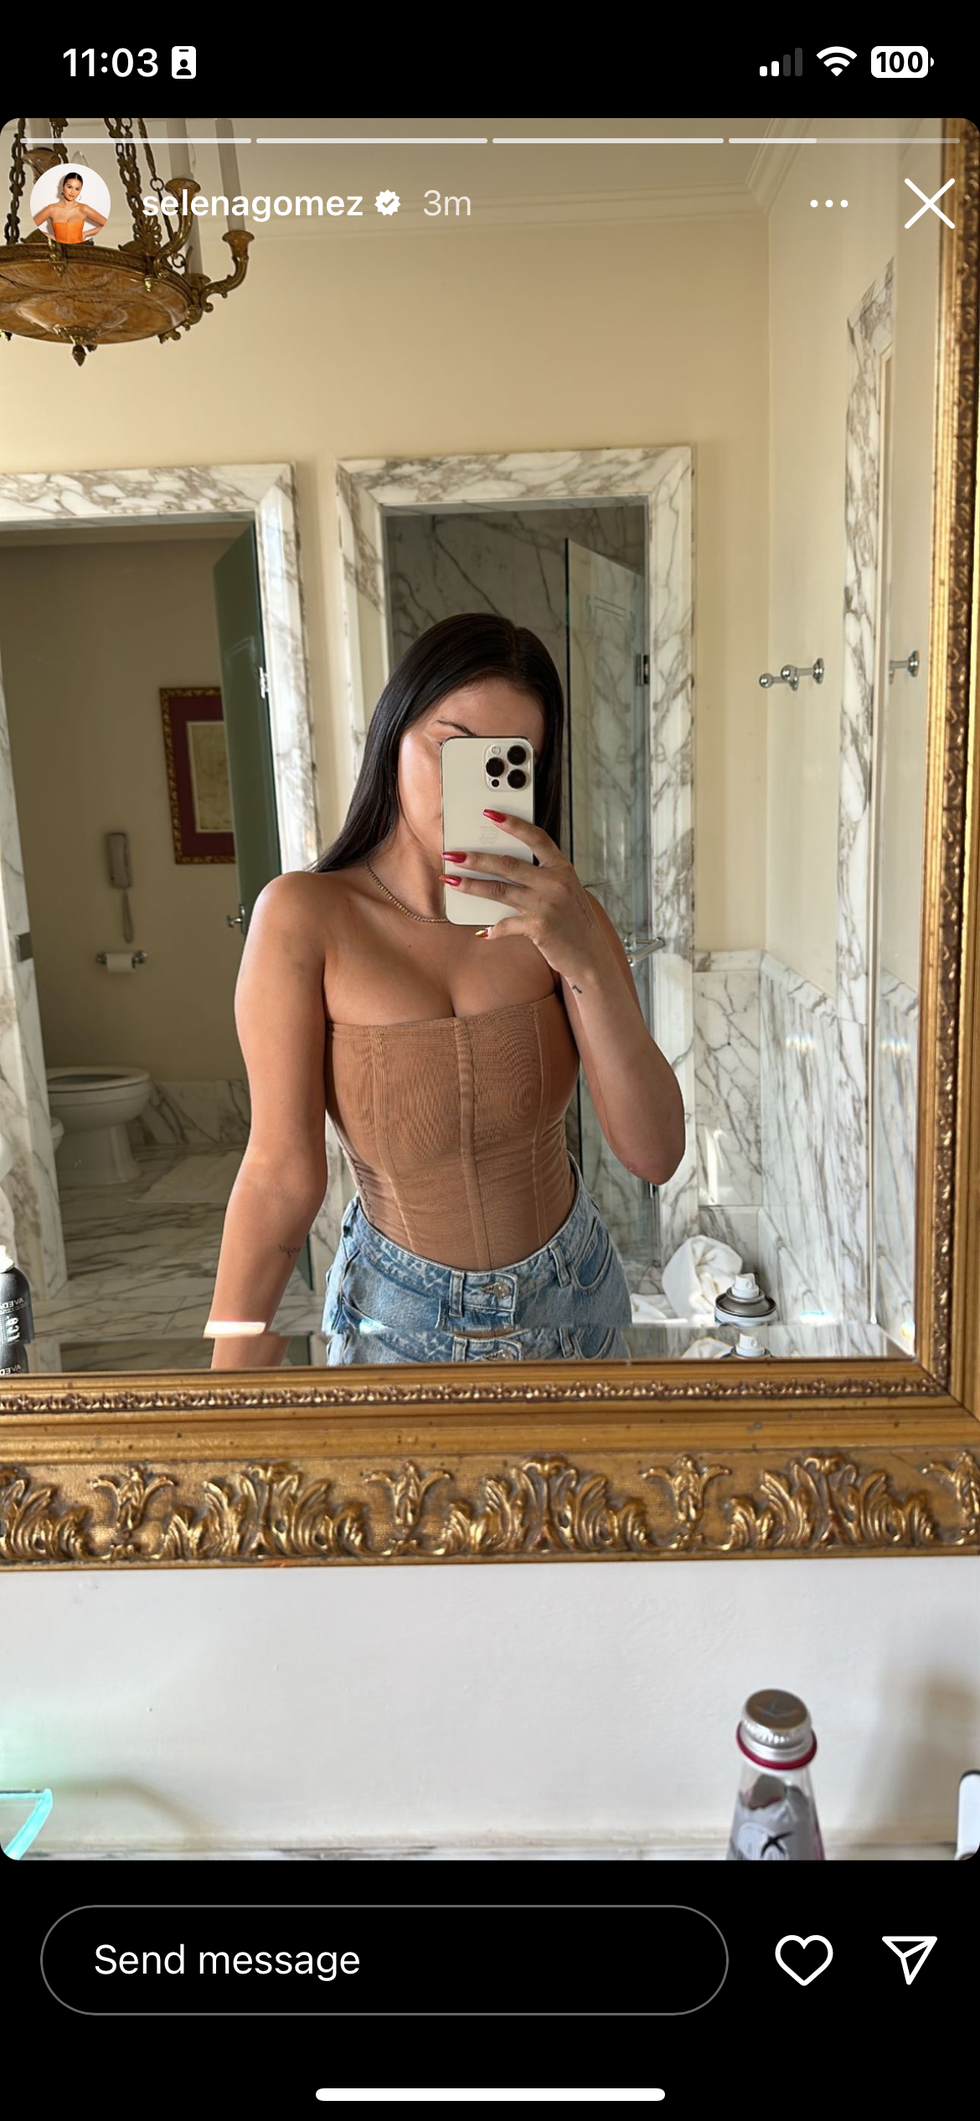 selena gomez in a tan corset top